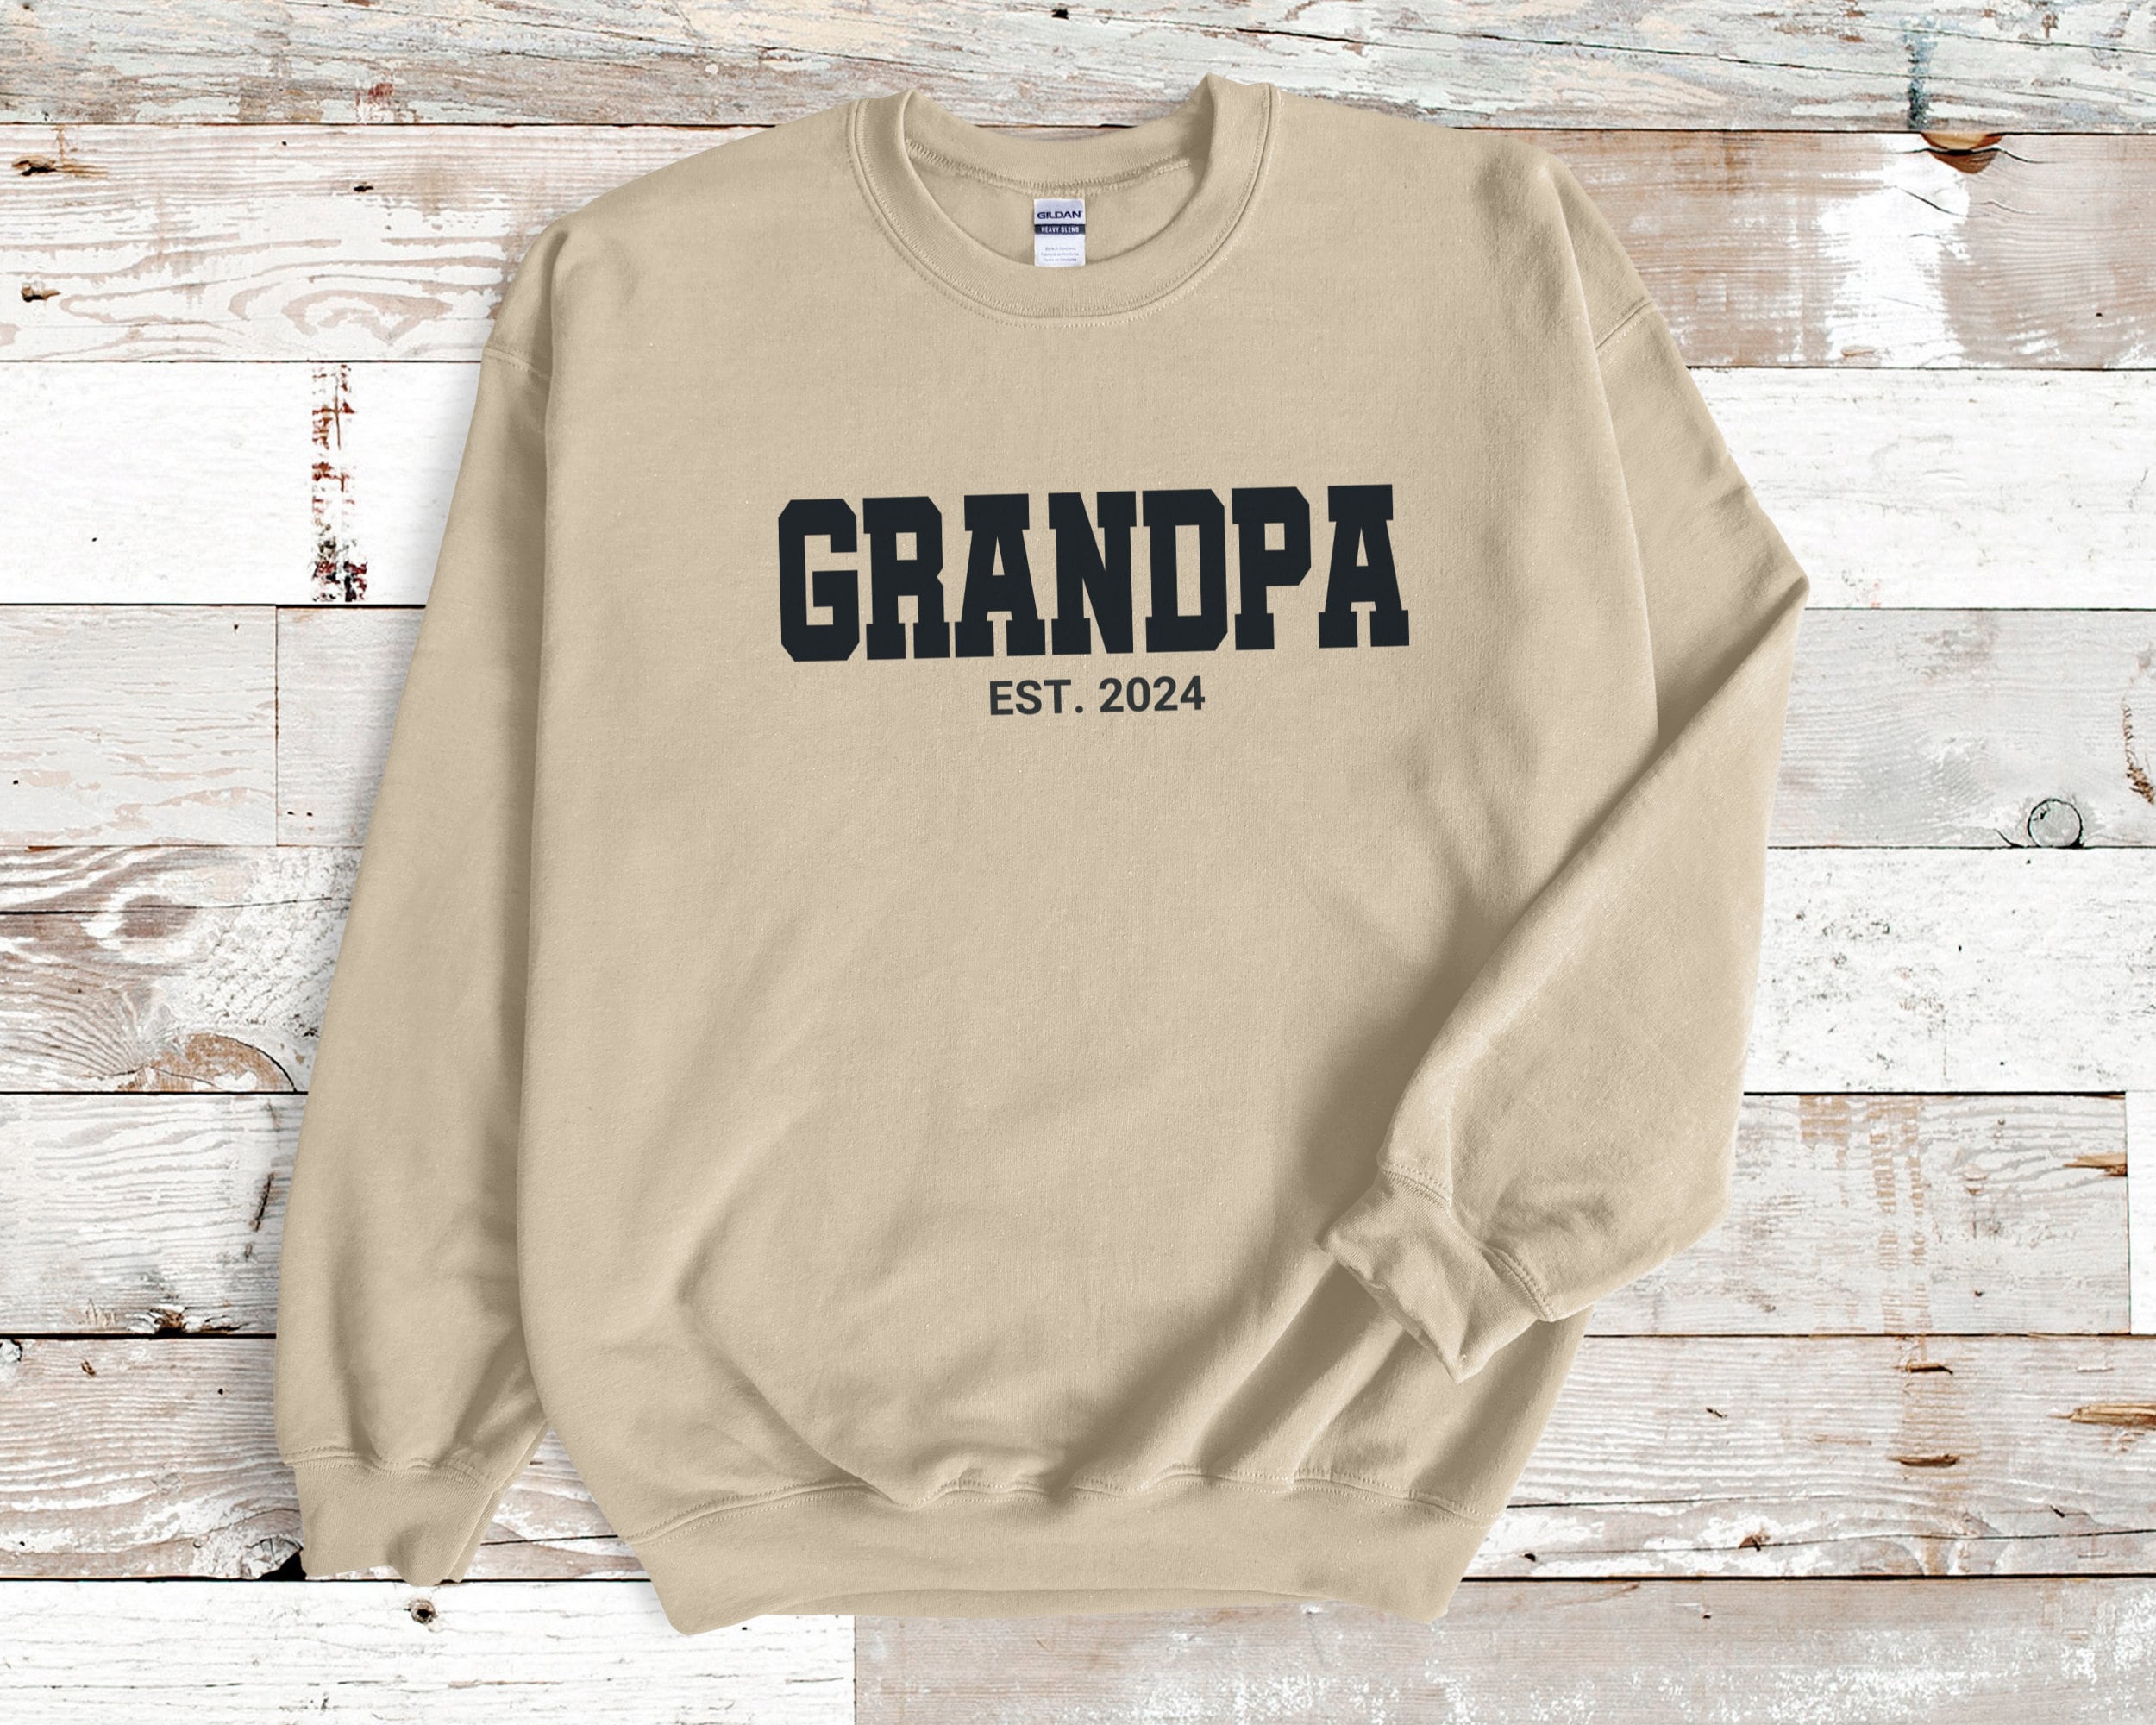 Grandpa EST 2024 Sweatshirt, Gift for Grandpa, Grandpa Shirt, Grandpa Gift, New Grandpa Gift, Papa Gift, Father’s Day Gift, Pregnancy Reveal 5